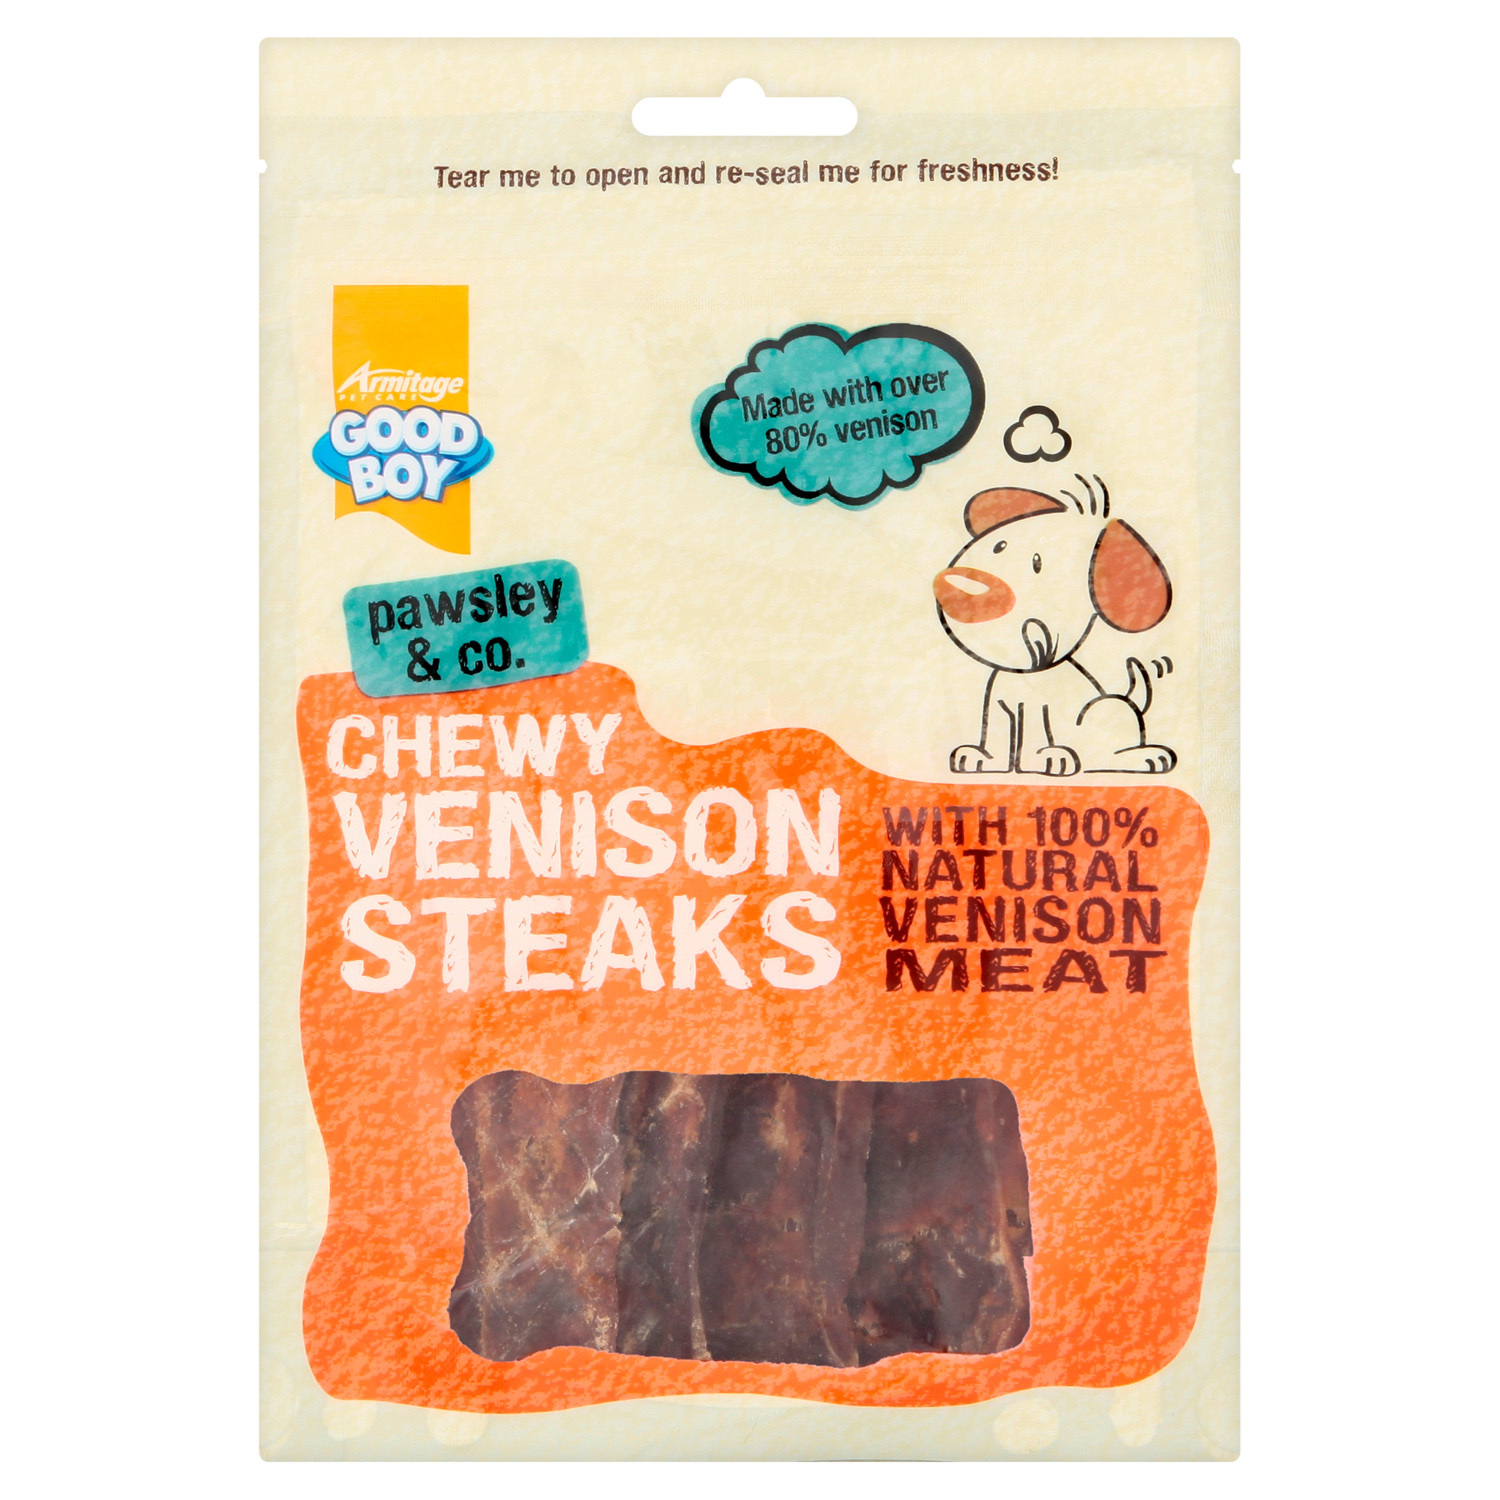 Good Boy Chewy Venison Steaks Dog Treats Image